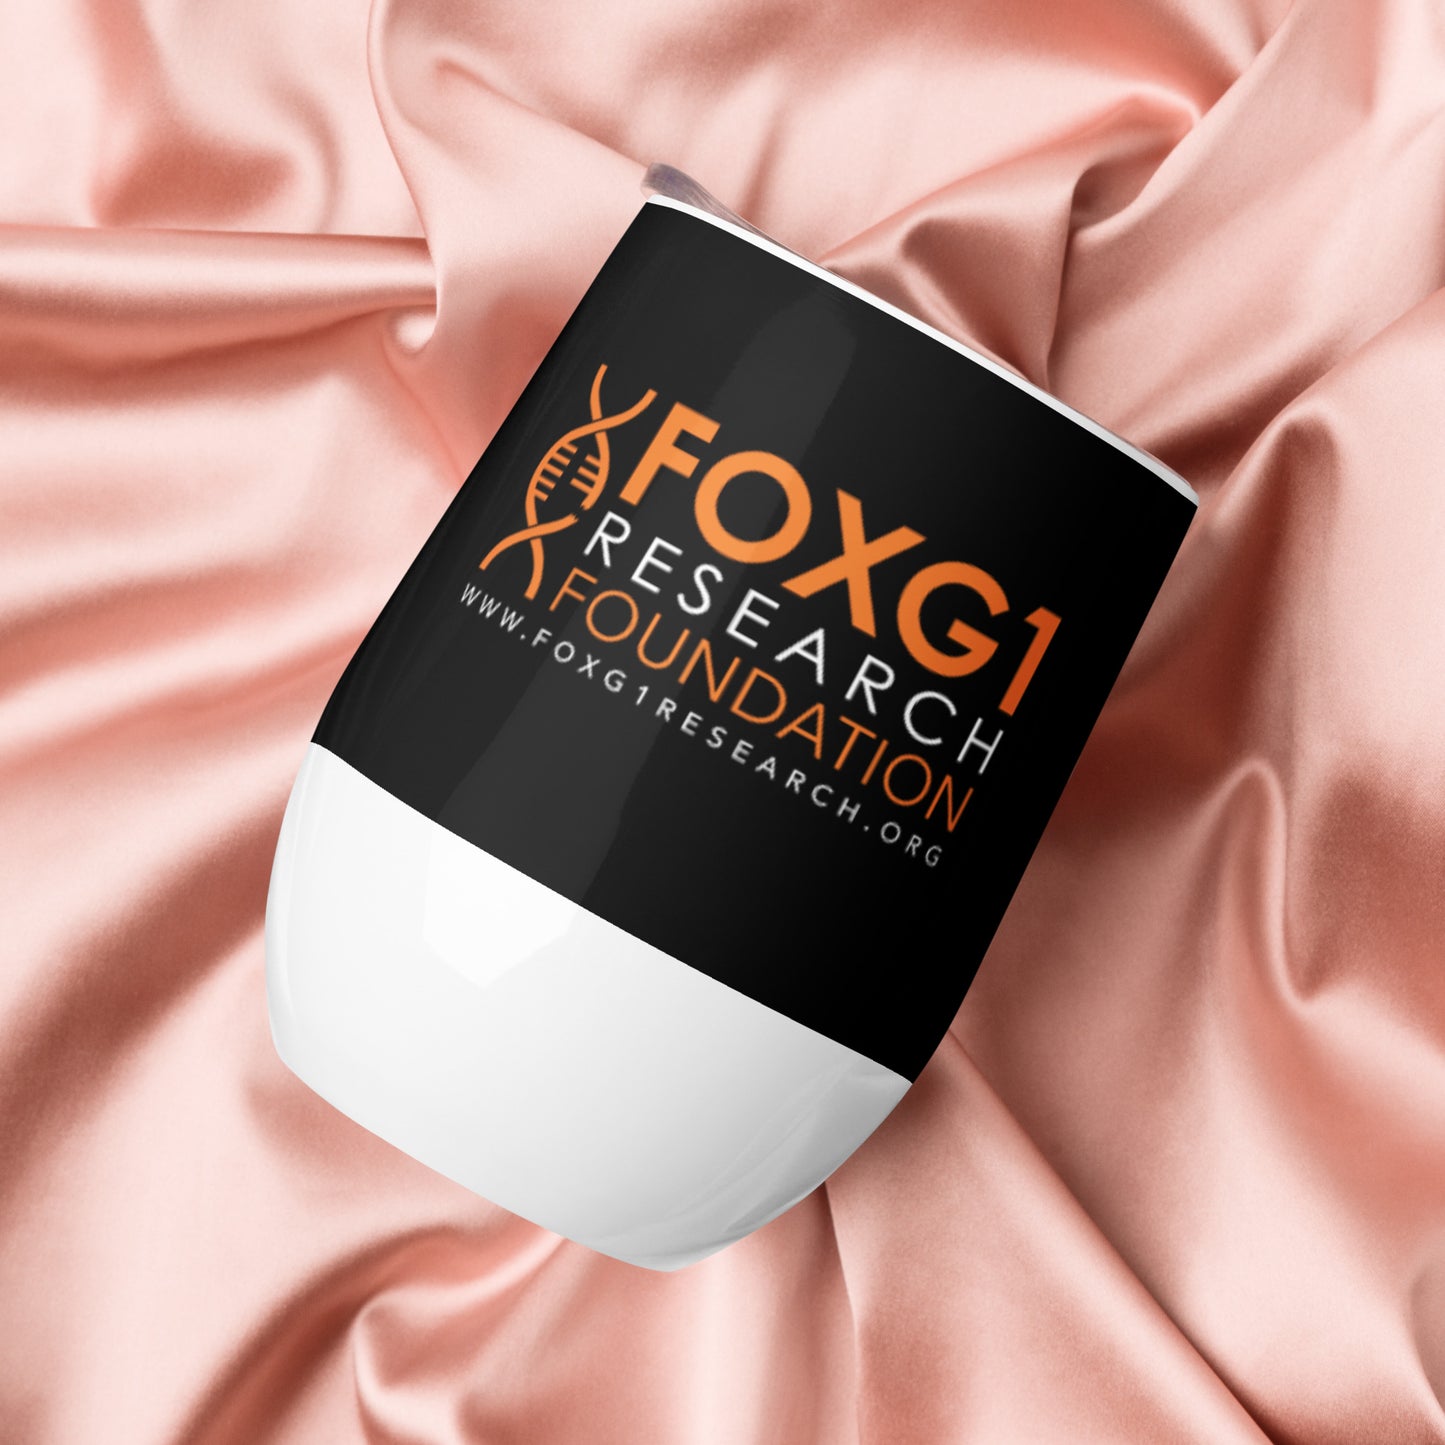 FOXG1 Foundation Wine Tumbler - Black